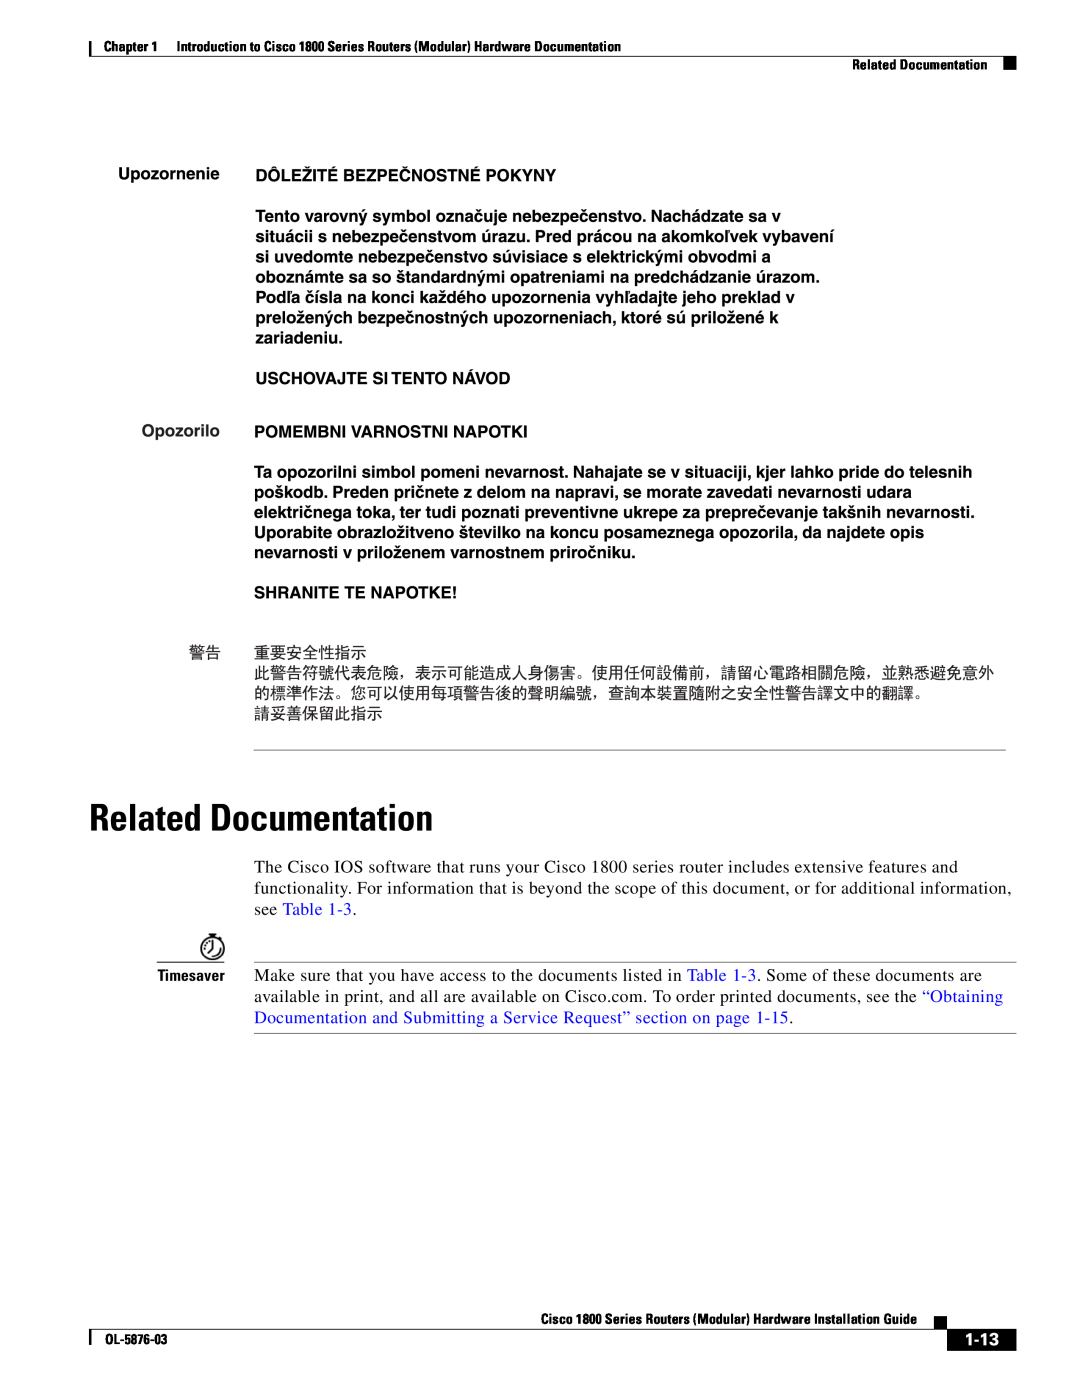 Cisco Systems CISCO1841-HSEC/K9-RF manual Related Documentation, 1-13 